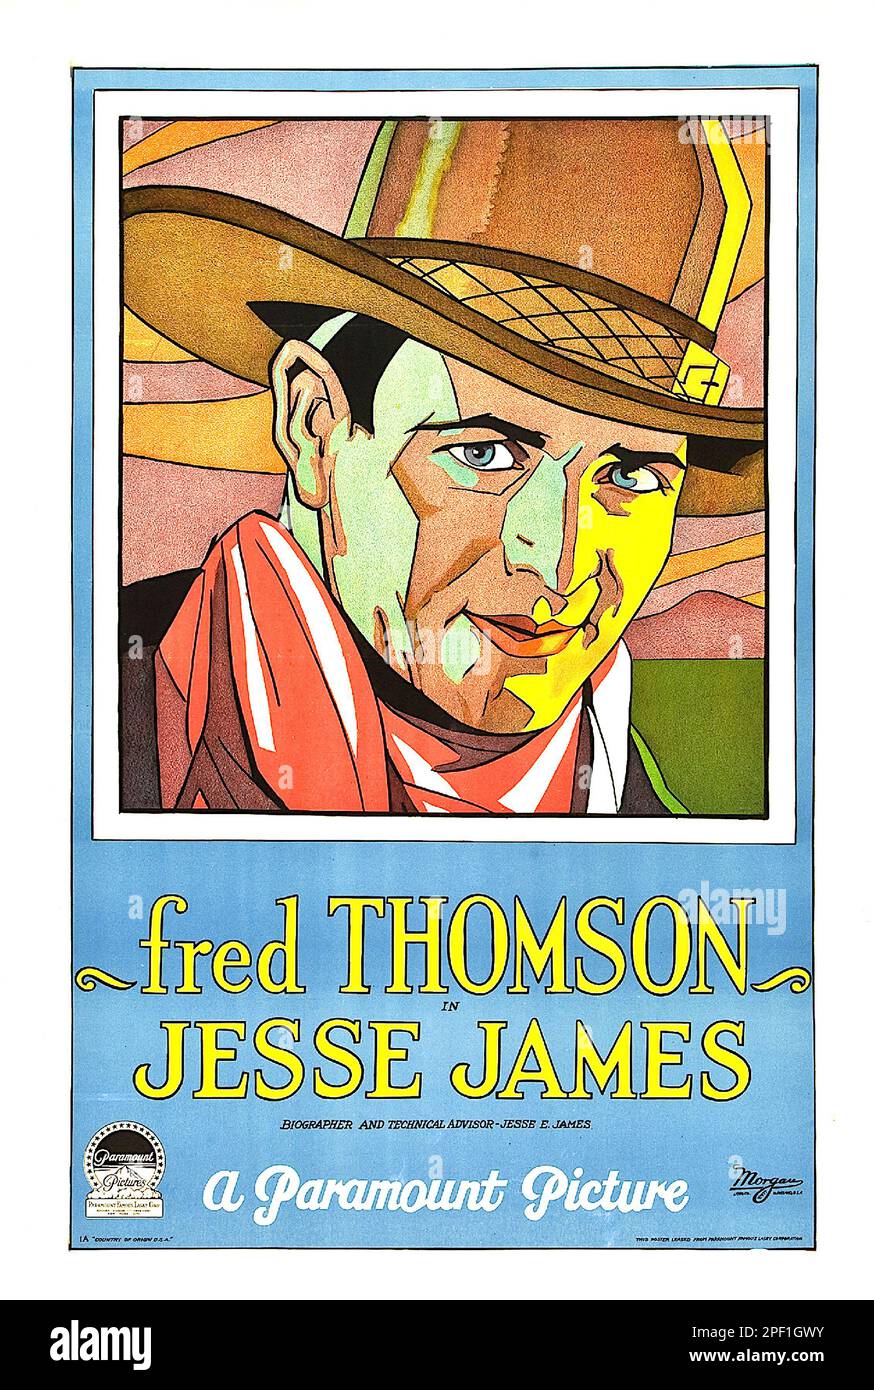 Jesse James - 1927 - Film Poster Stock Photo